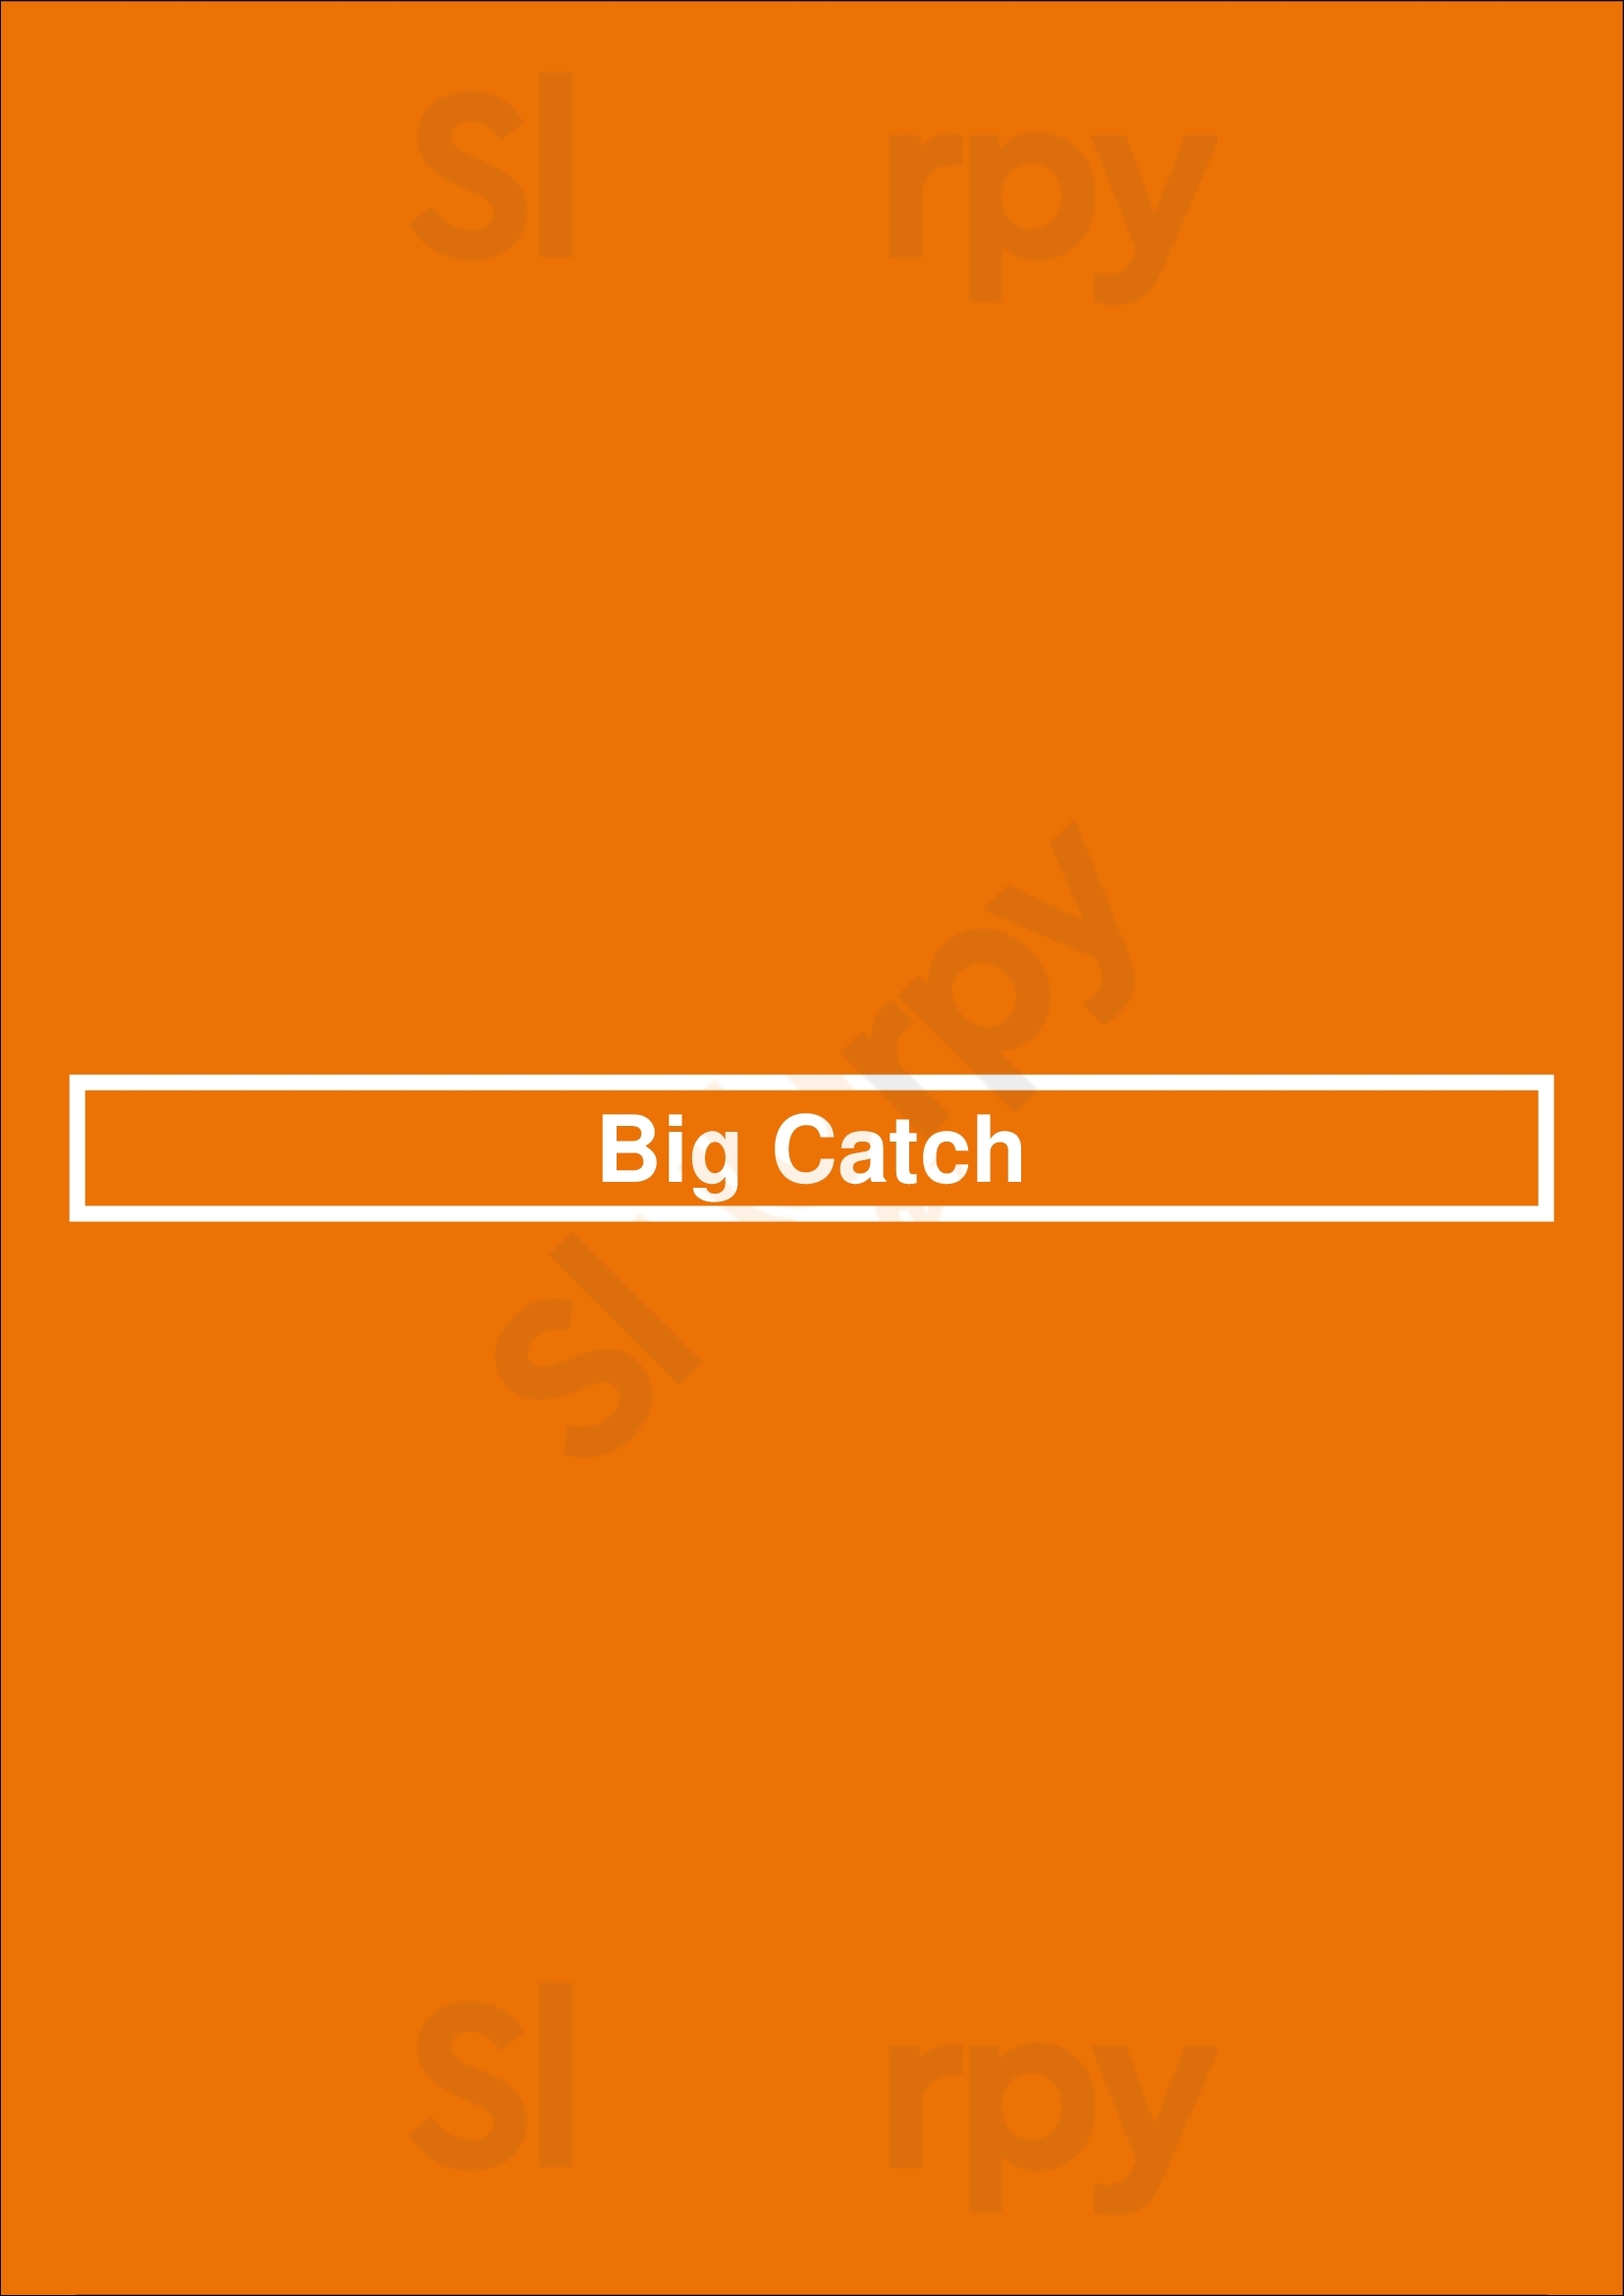 Big Catch Calgary Menu - 1